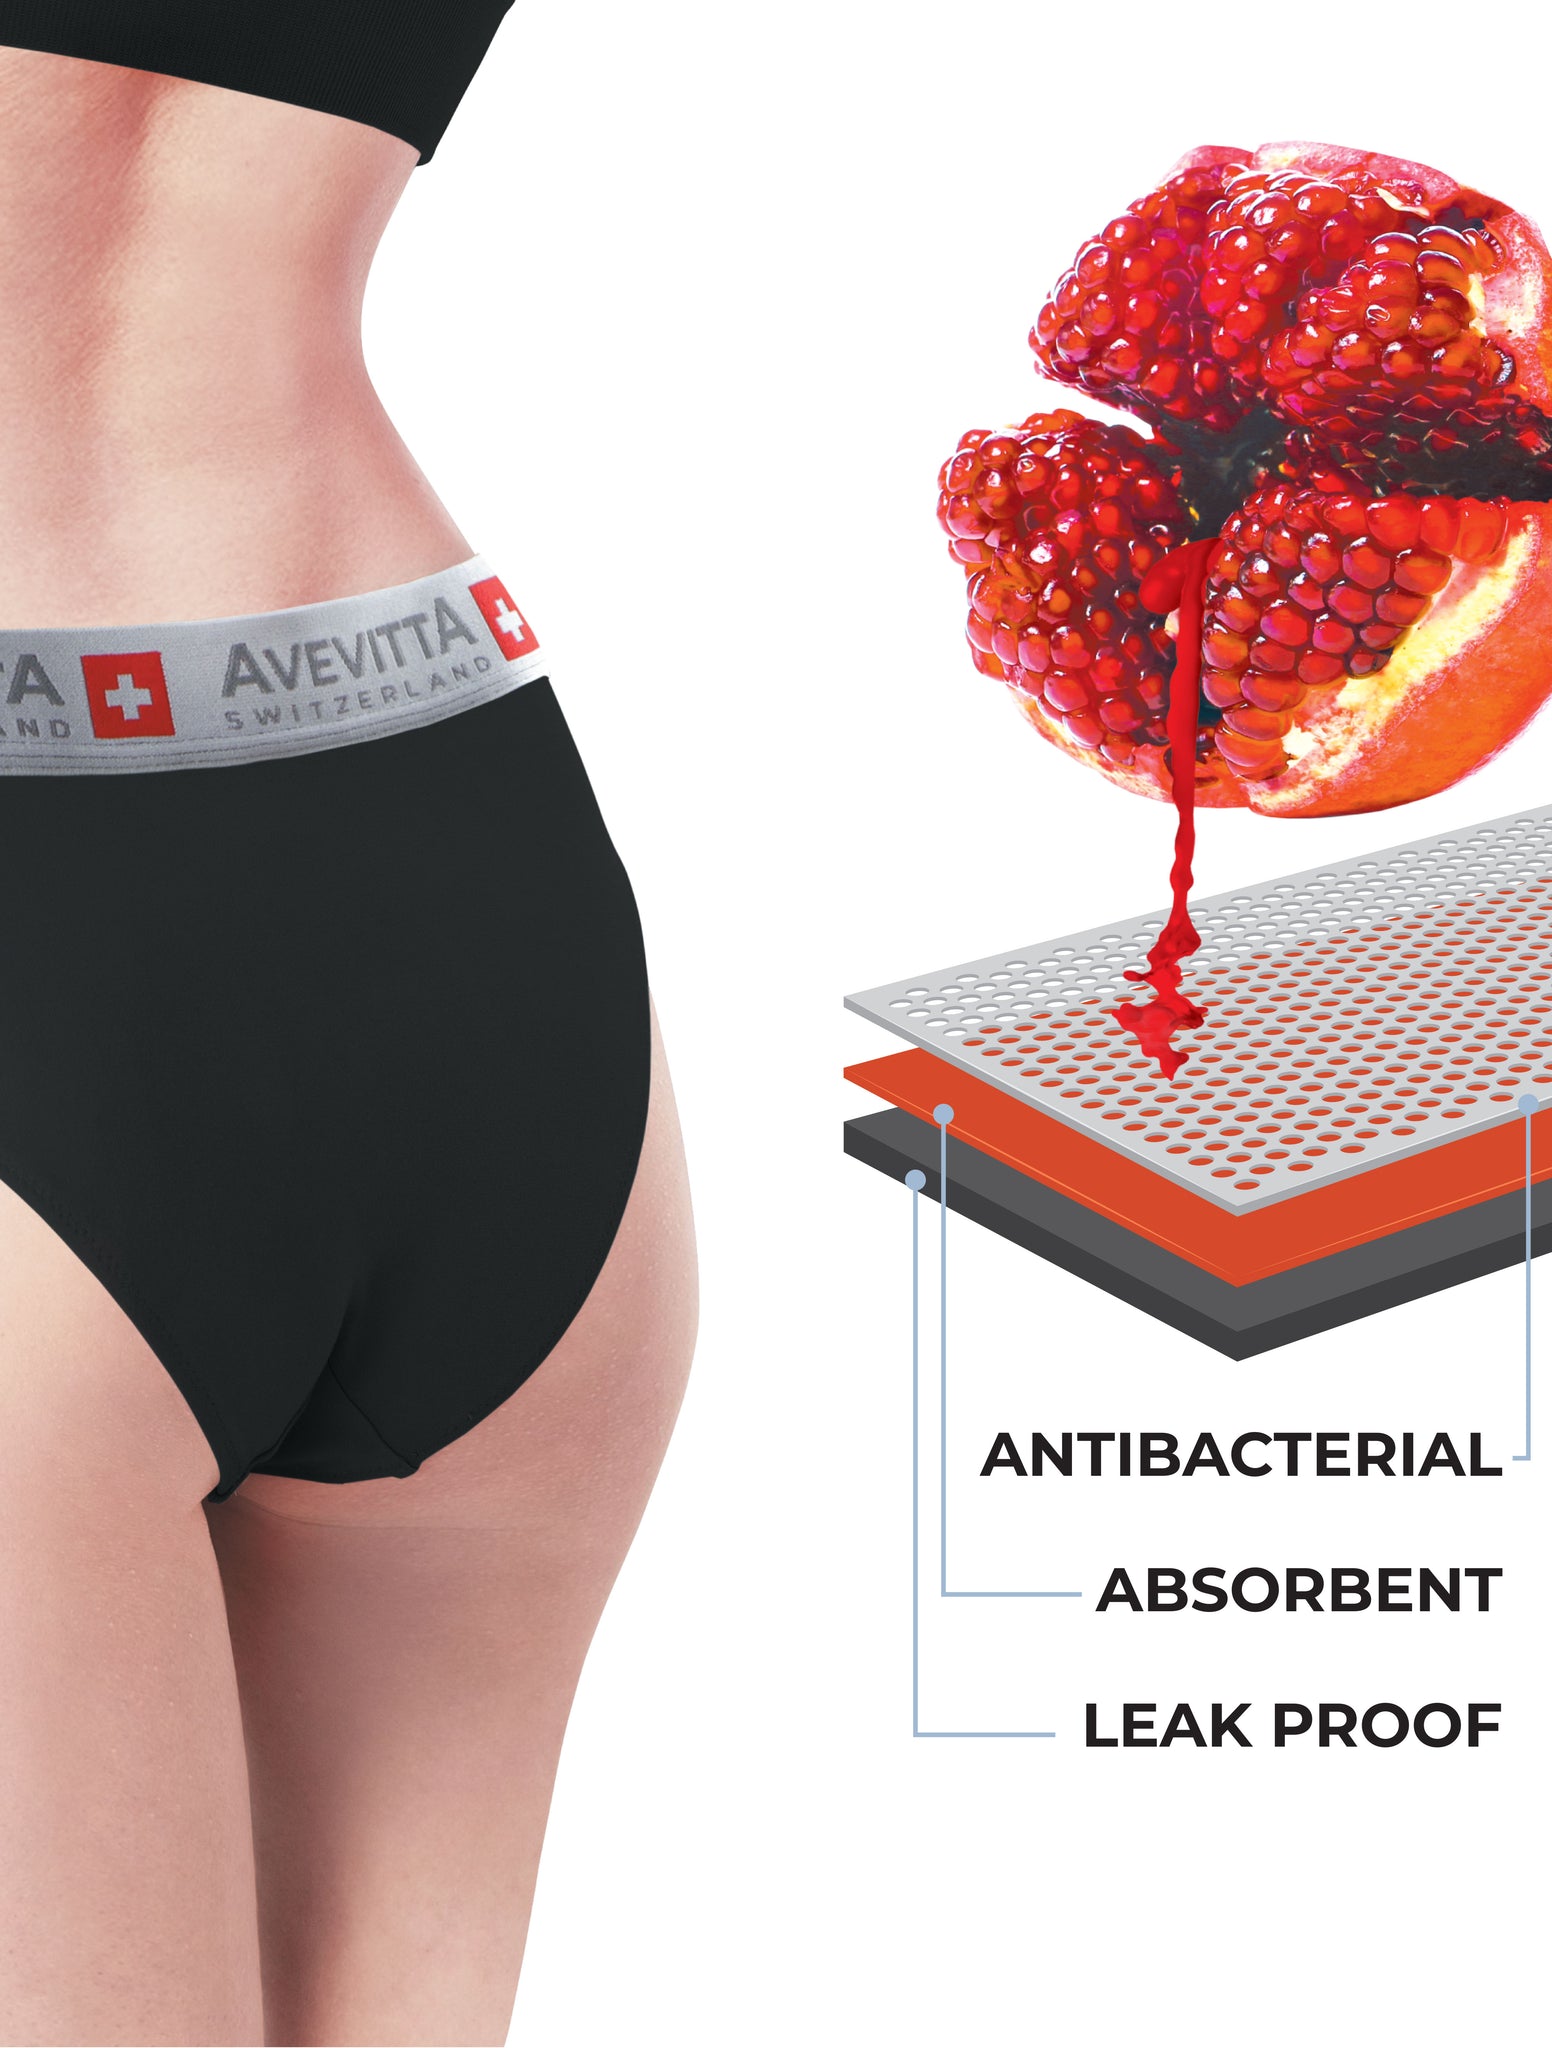 S Panties Comfort Undergarments Products Leak Proof Menstrual